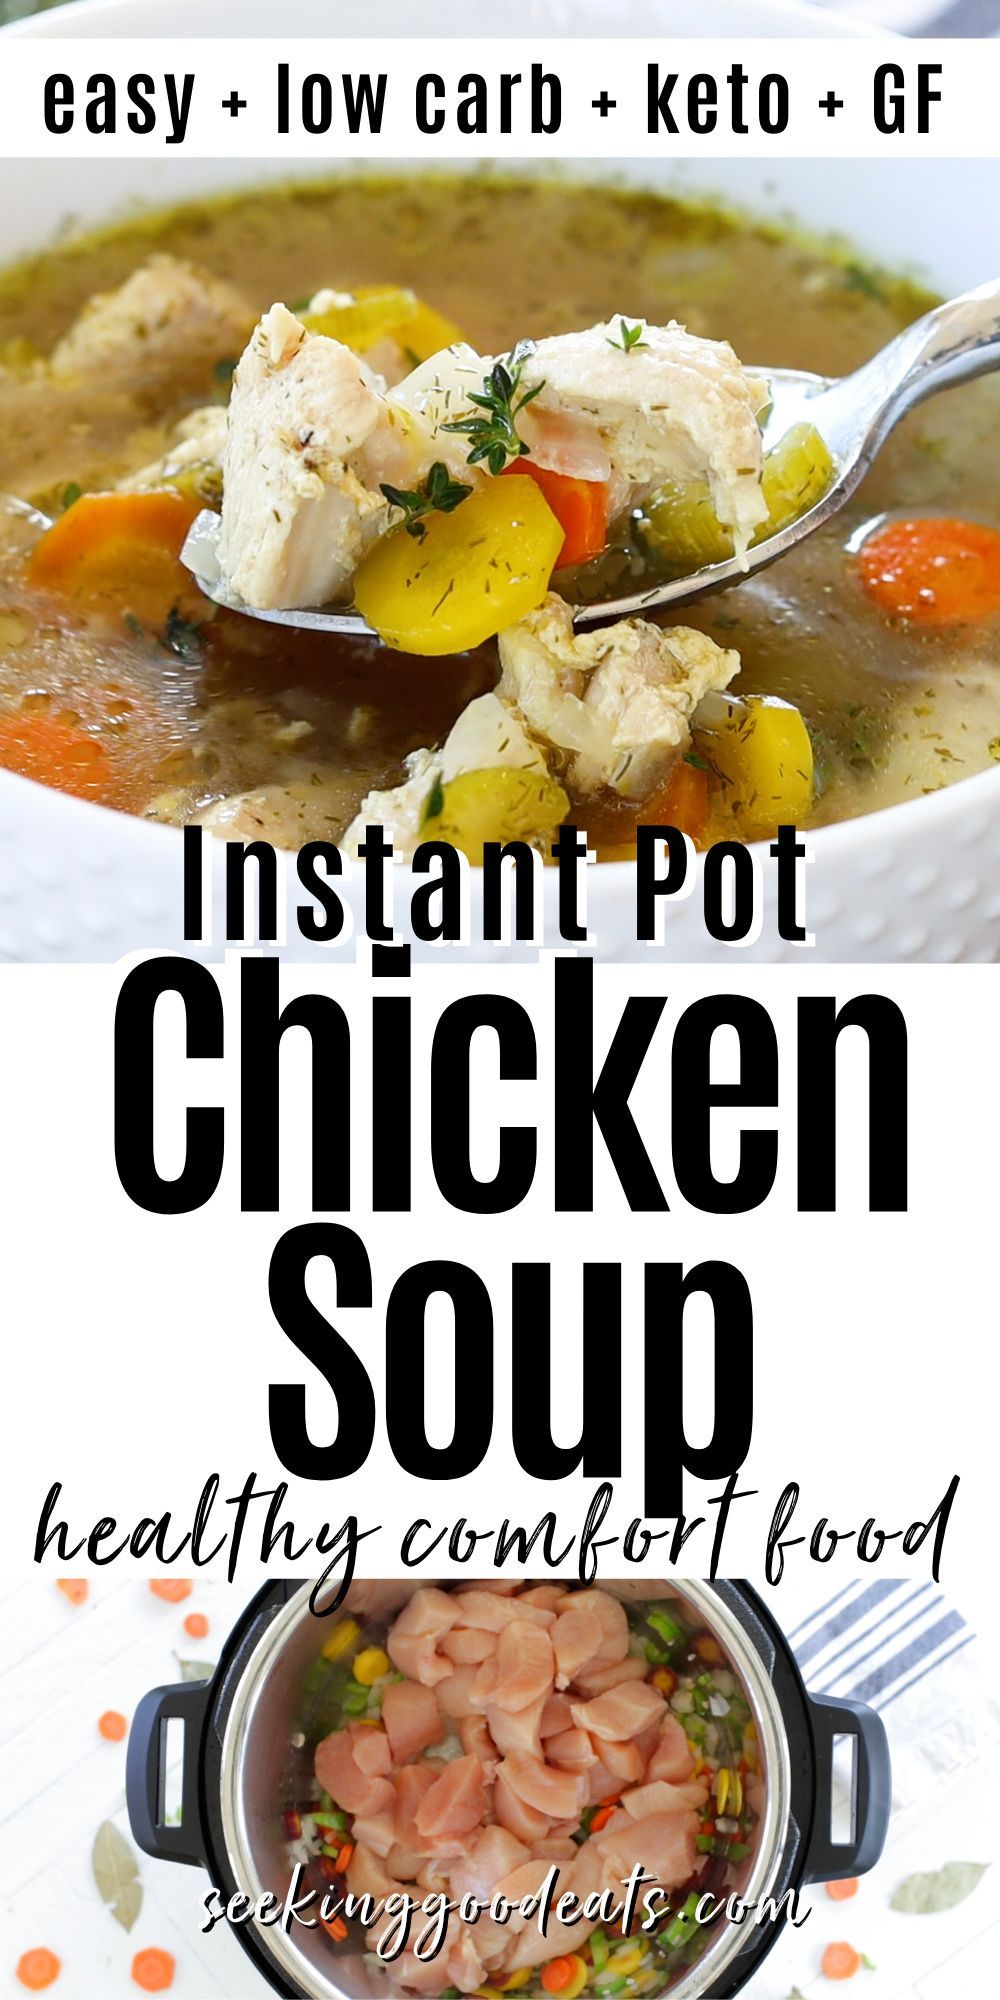 Instant Pot Chicken Recipes Healthy Keto